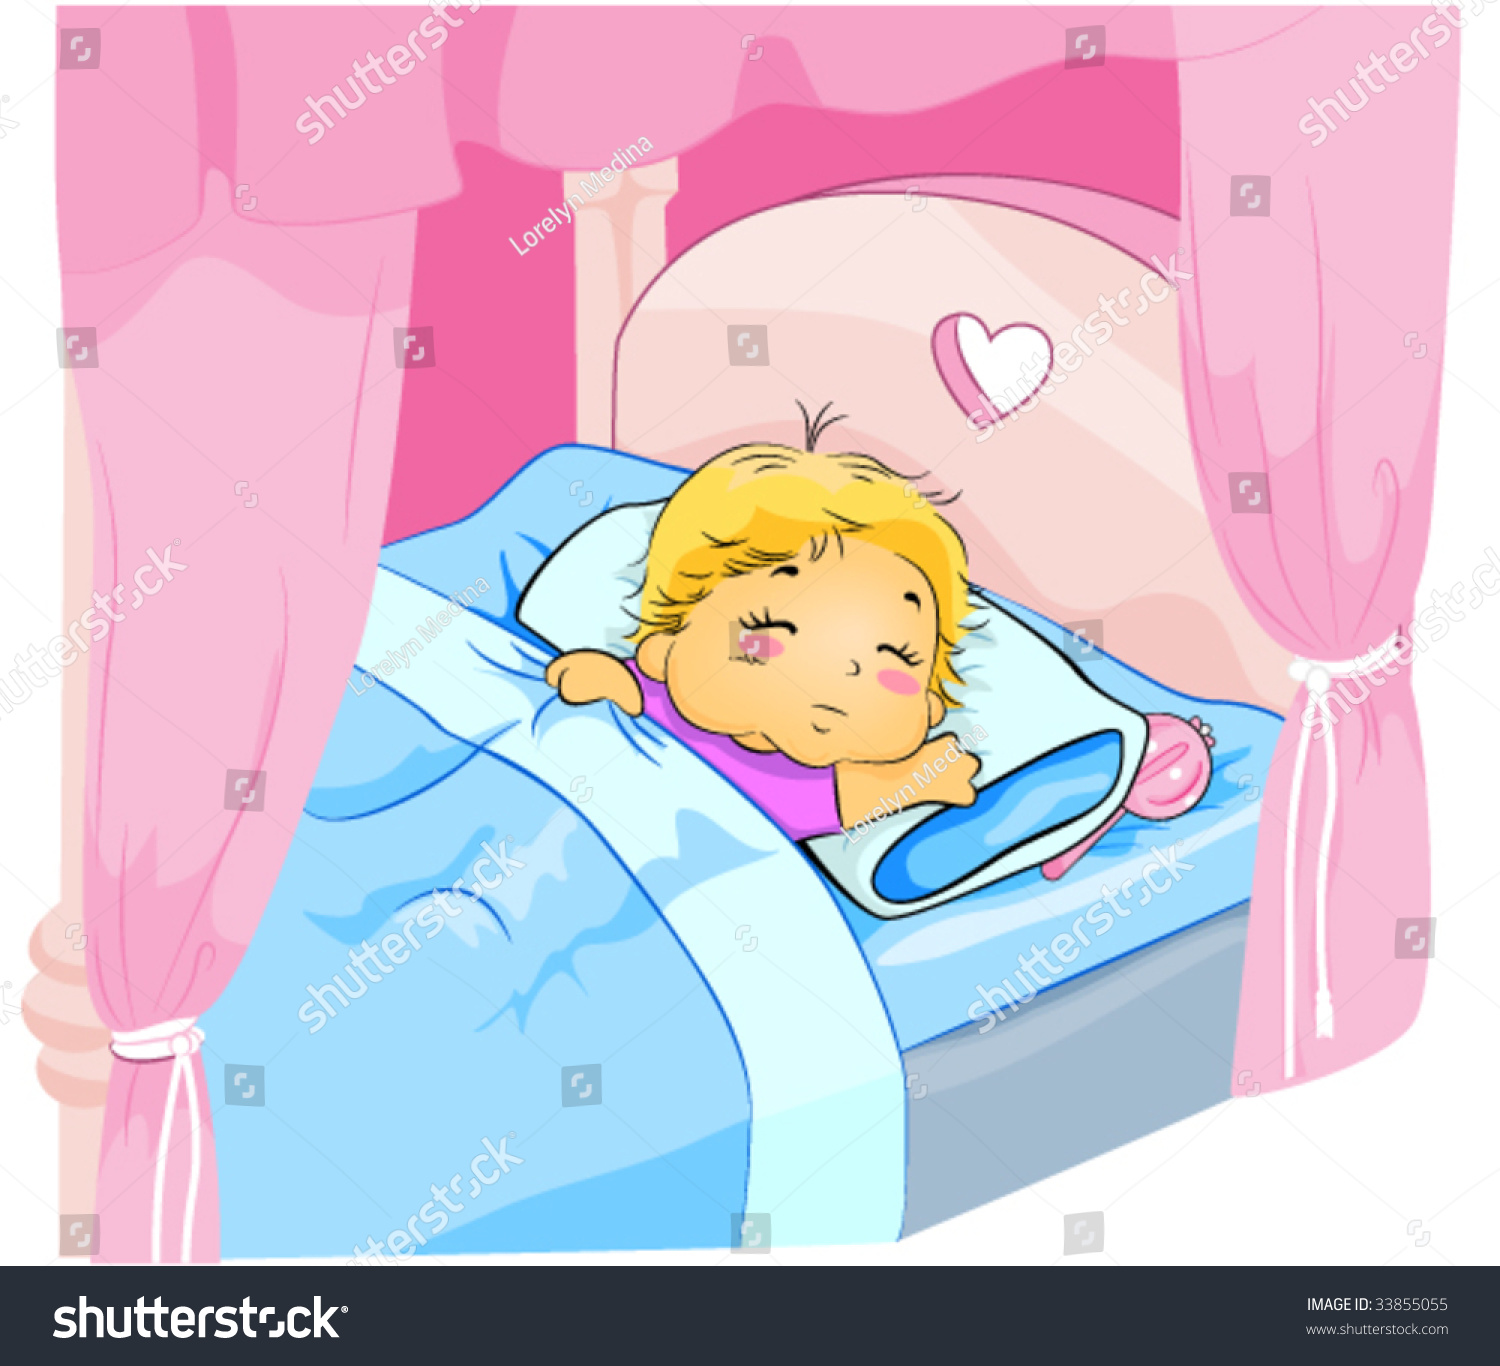 Child Sleeping In Canopy Bed - Vector - 33855055 : Shutterstock